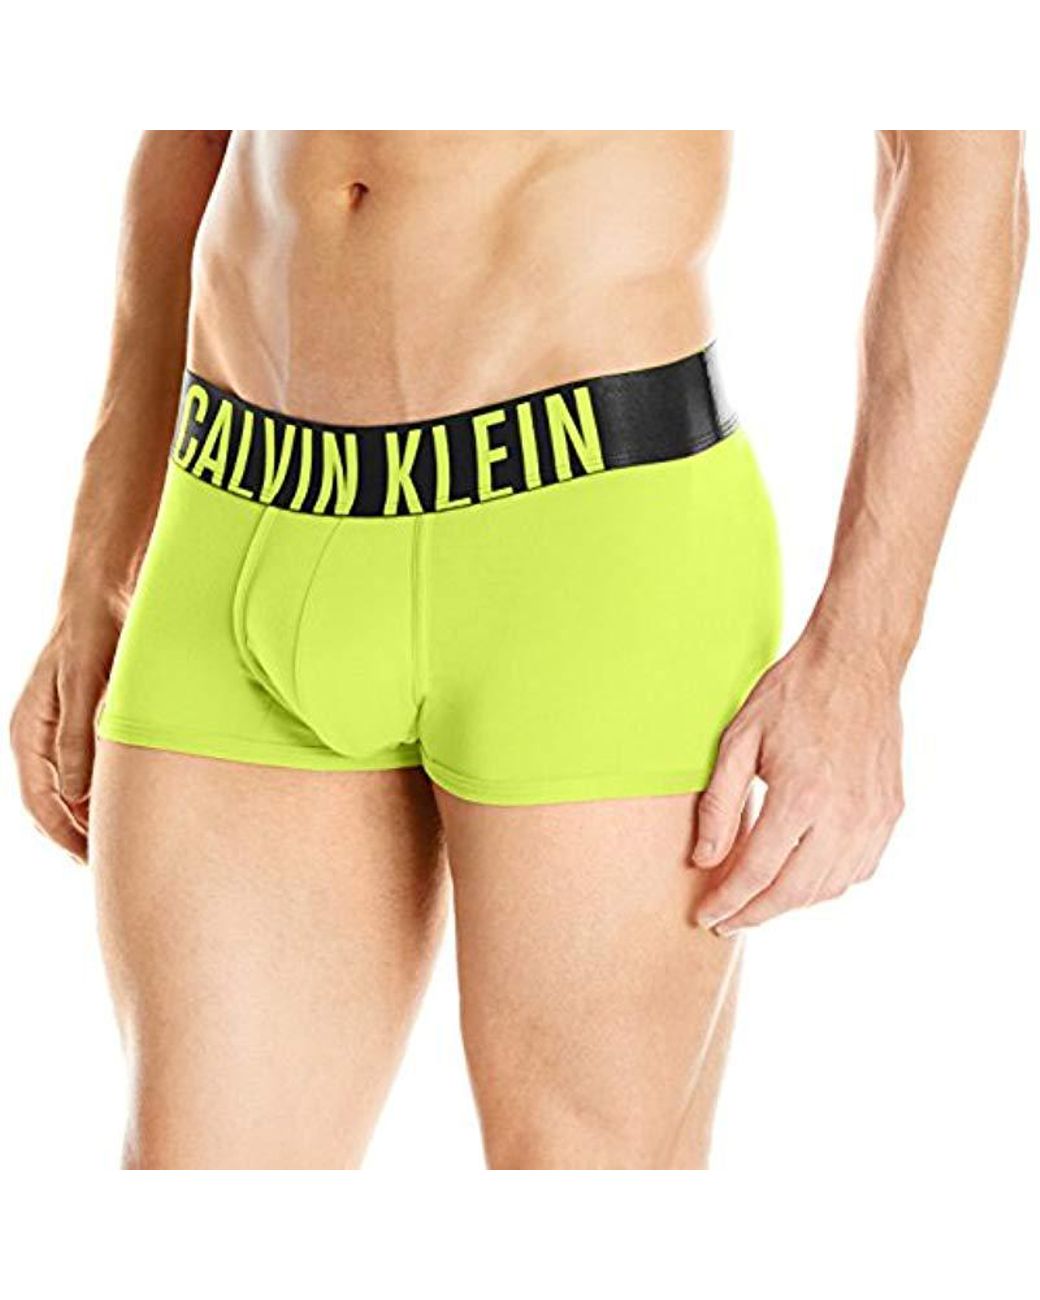 https://cdna.lystit.com/1040/1300/n/photos/amazon-prime/3858bcd1/calvin-klein-Striking-Lime-Underwear-Intense-Power-Micro-Low-Rise-Trunks.jpeg